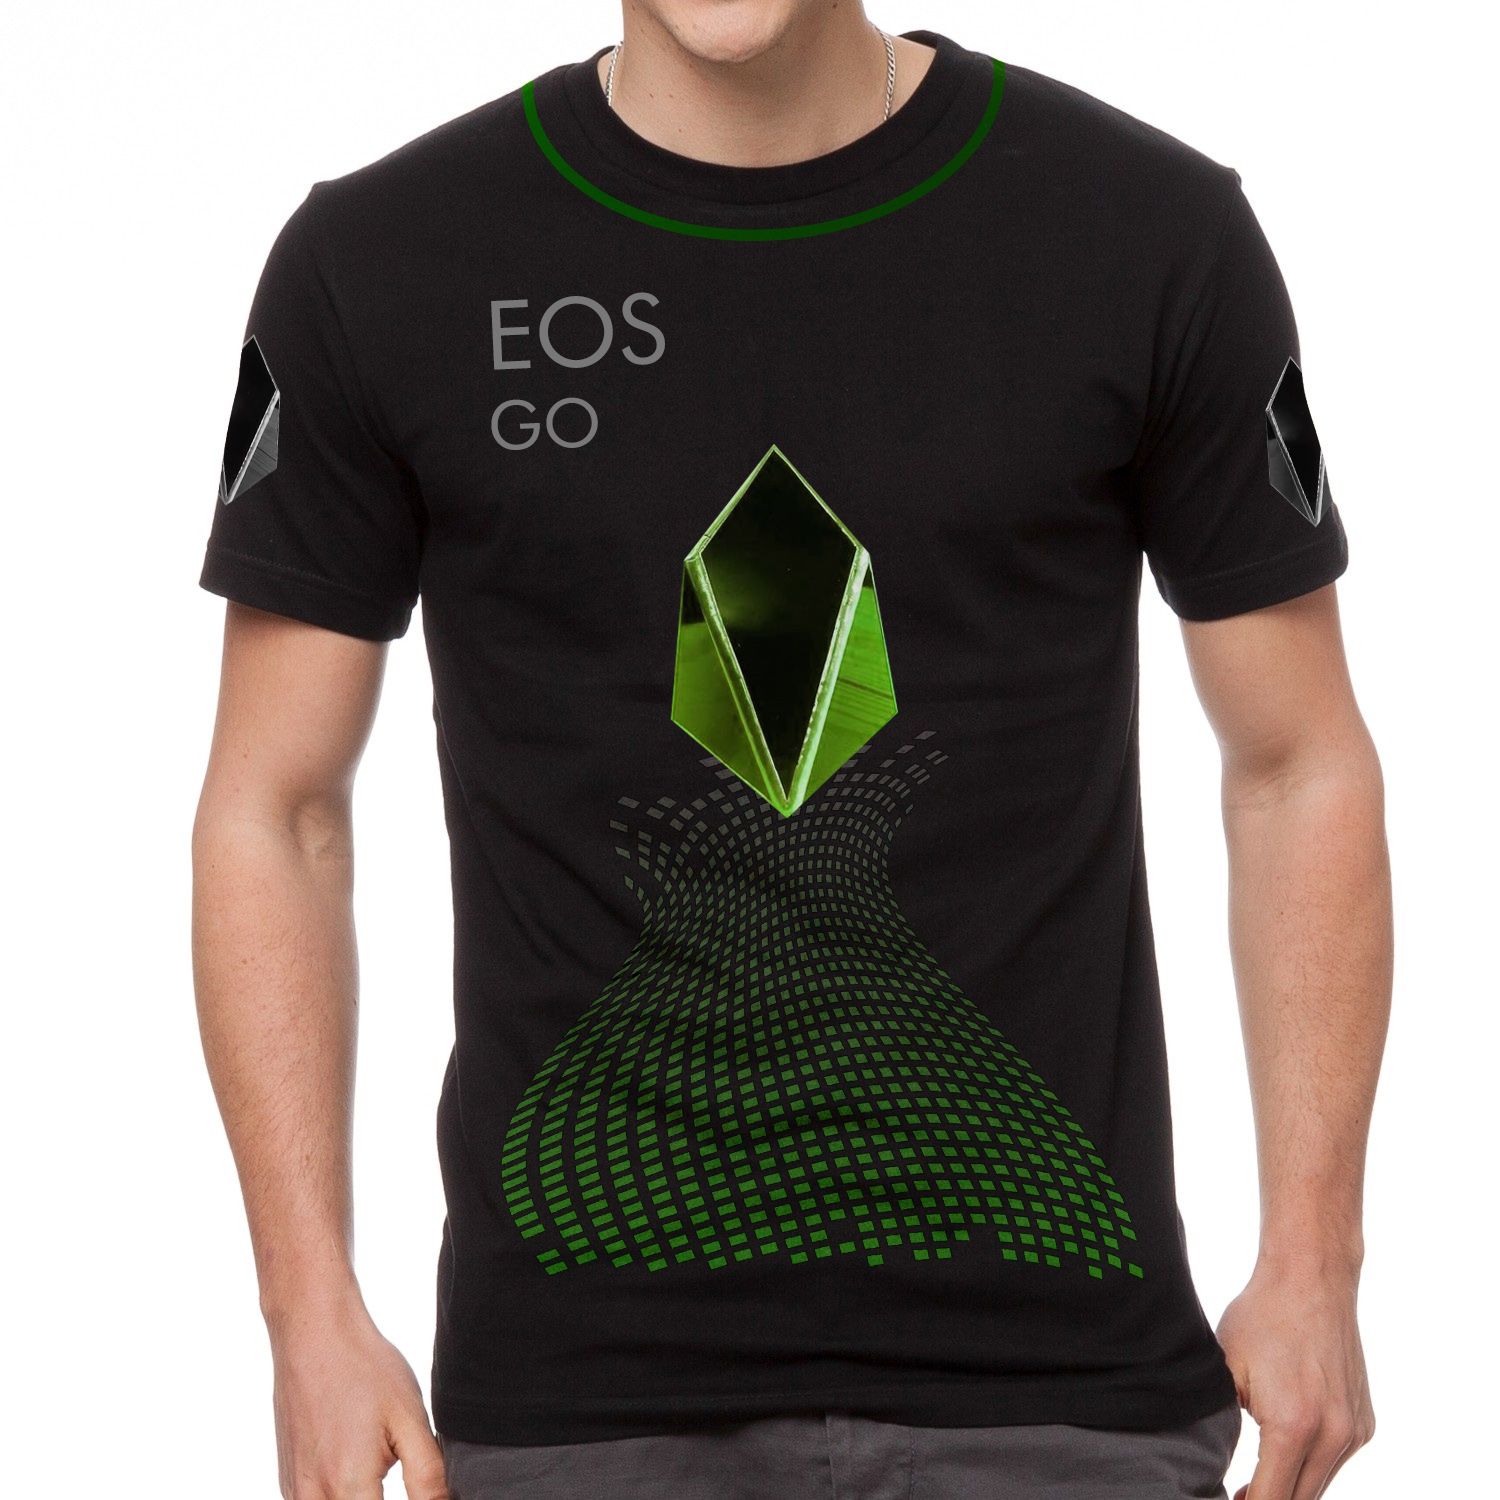 eos_go_shirt.jpg